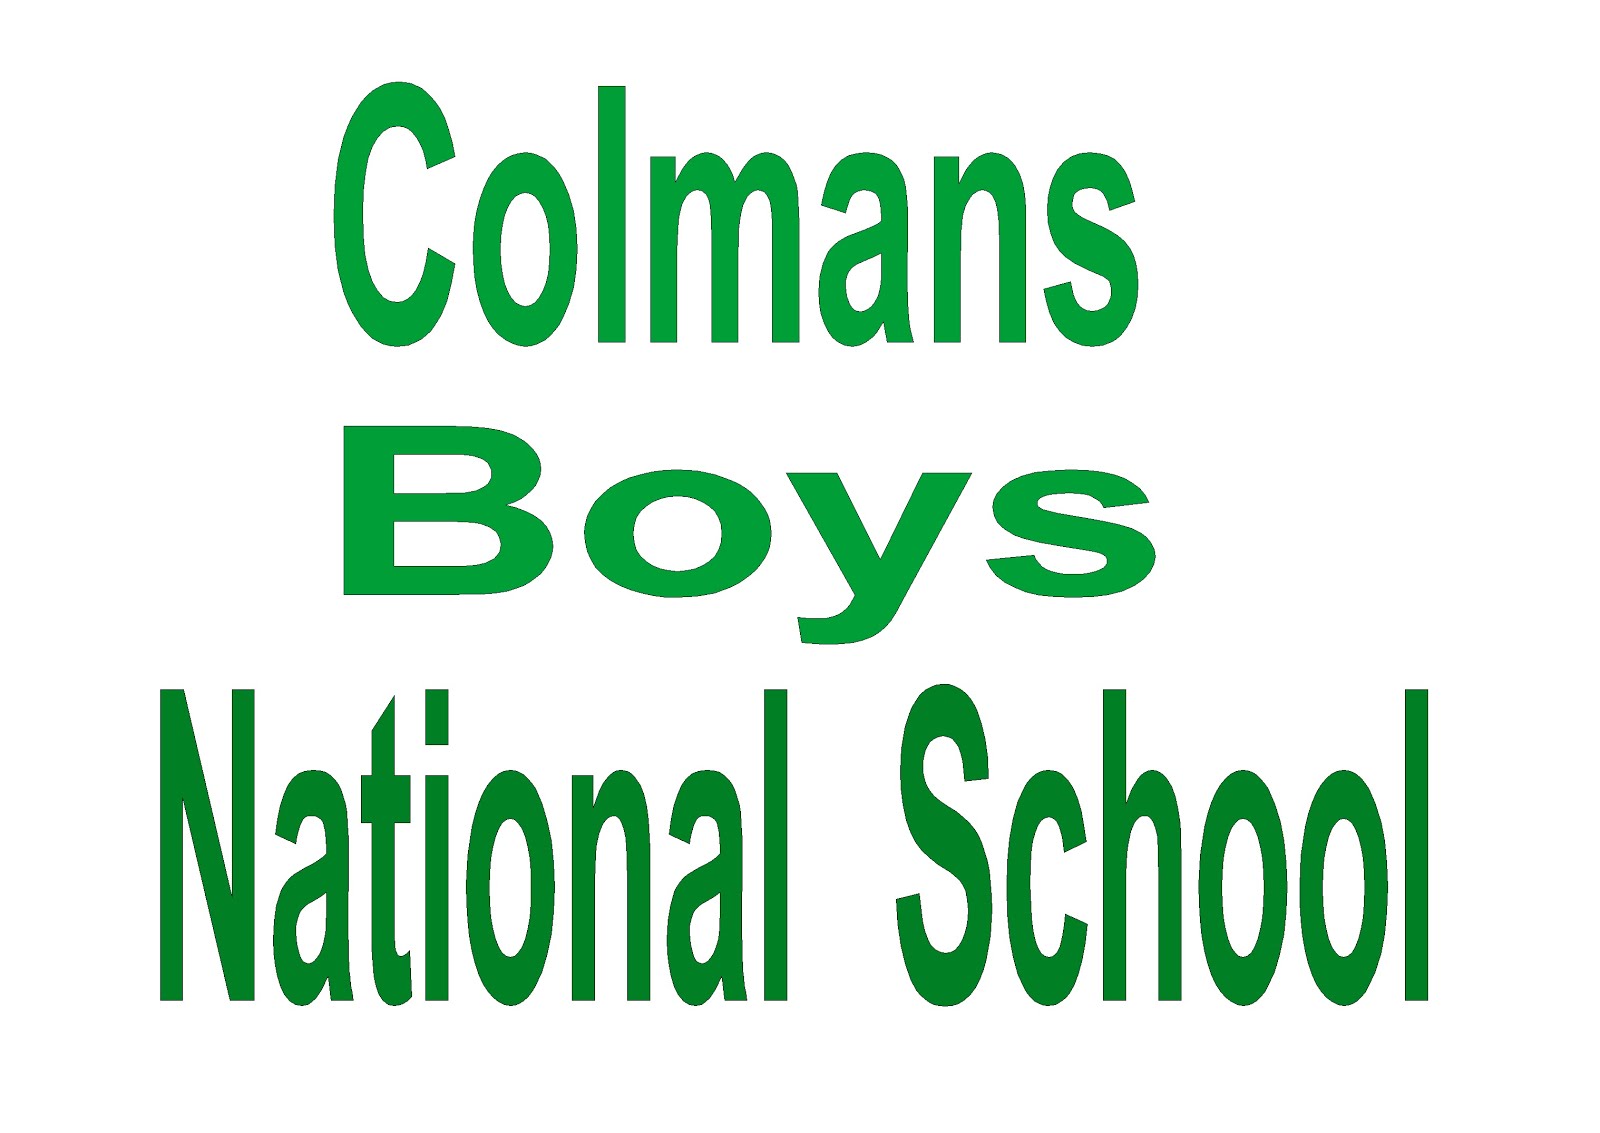 Colmans Boys National School